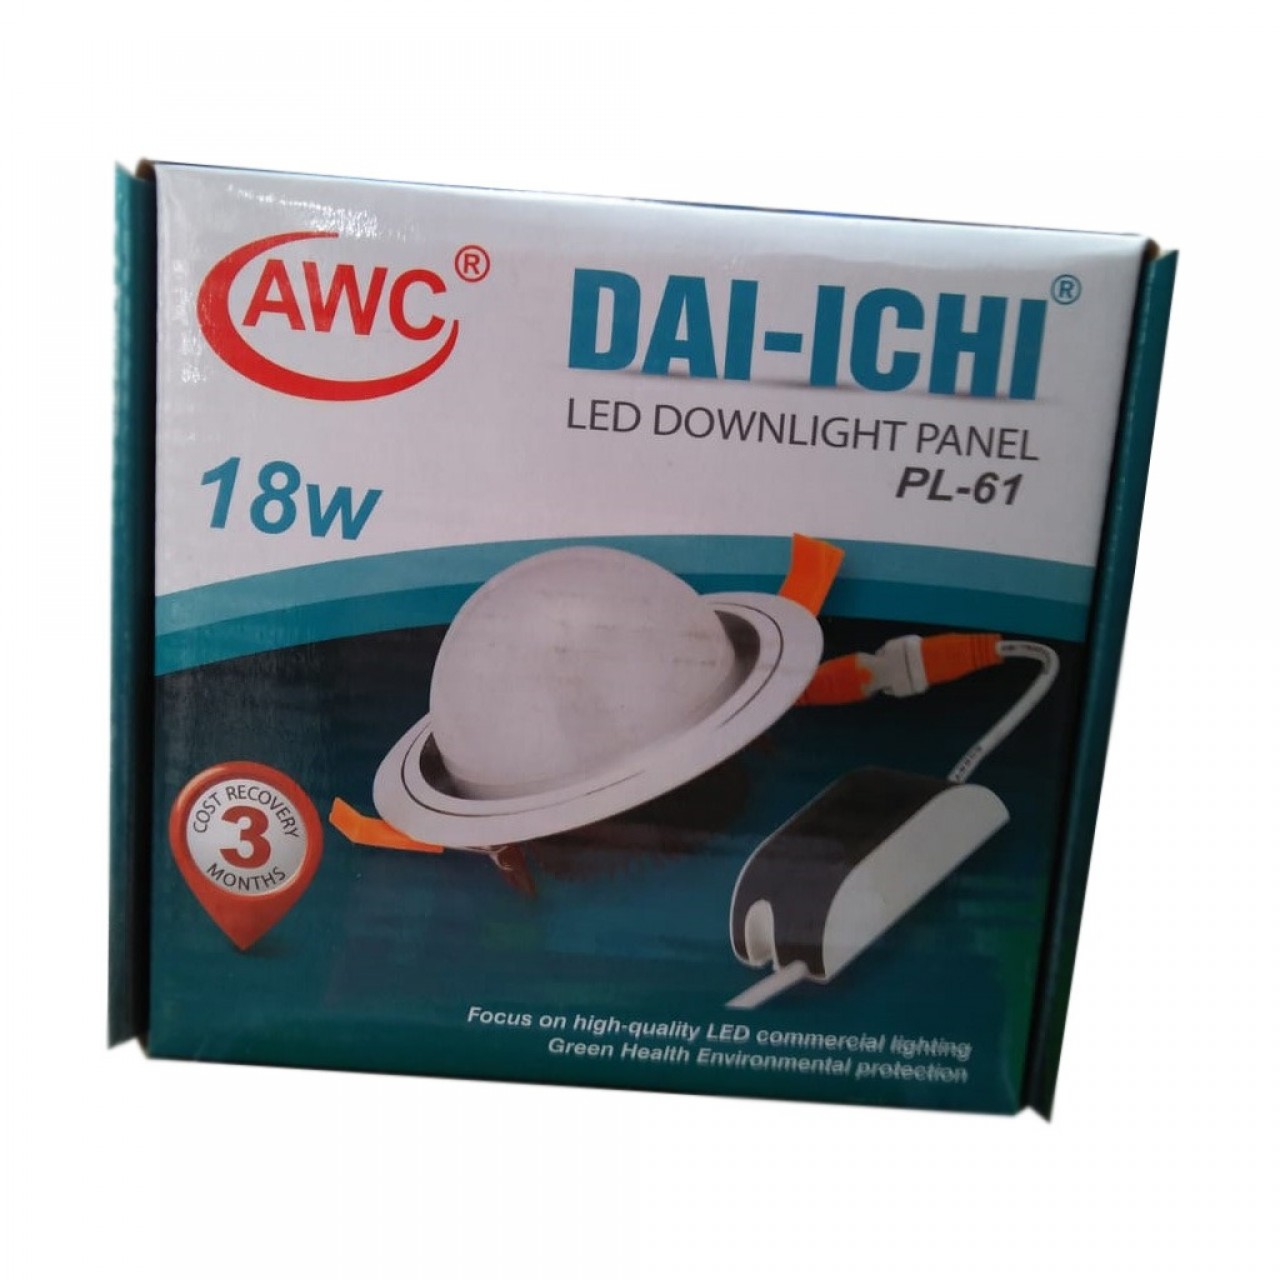 DAI-ICHI LED Downlight Panel PL-61 - 18 Watt - 3 Months Cost Recovery